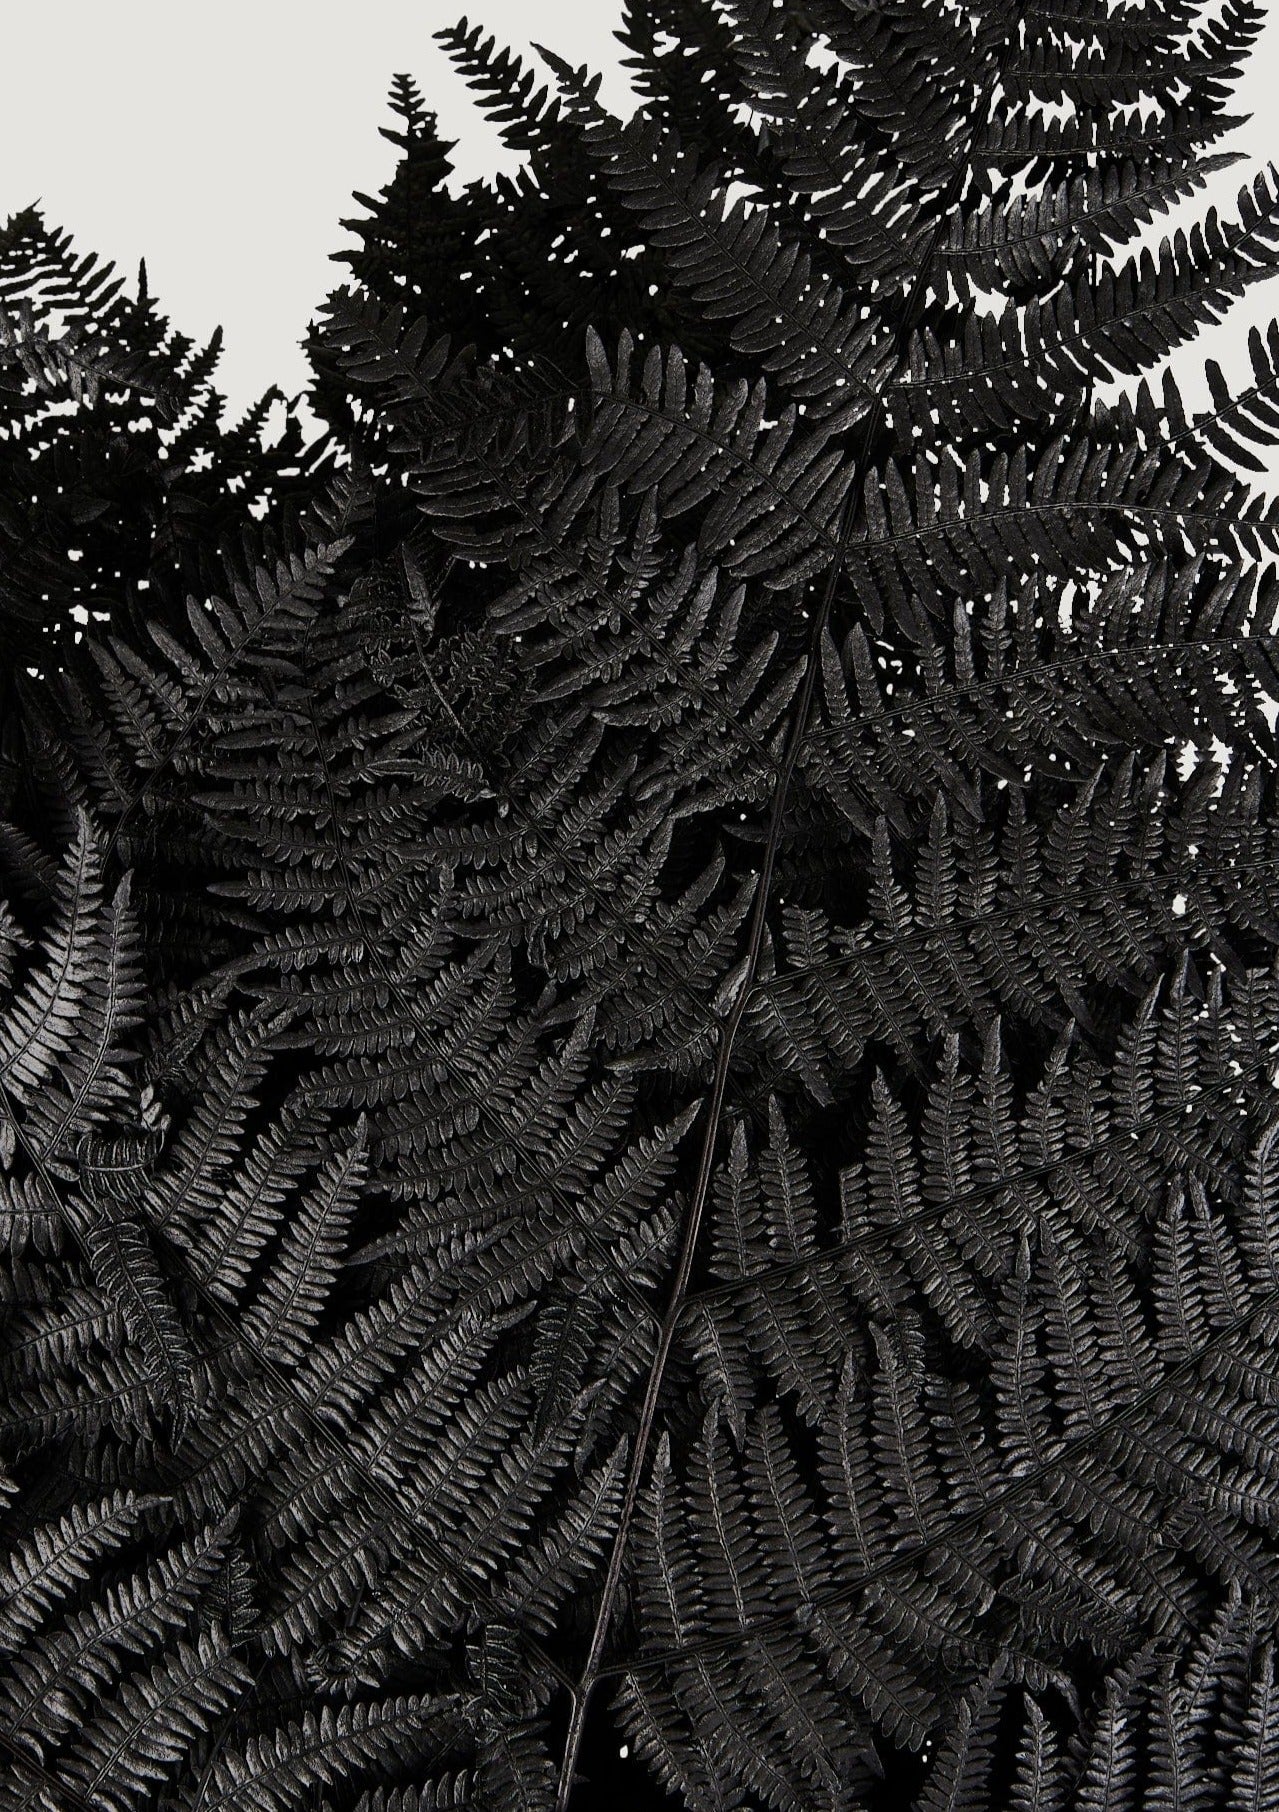 Preserved Bracken Fern Leaves in Black